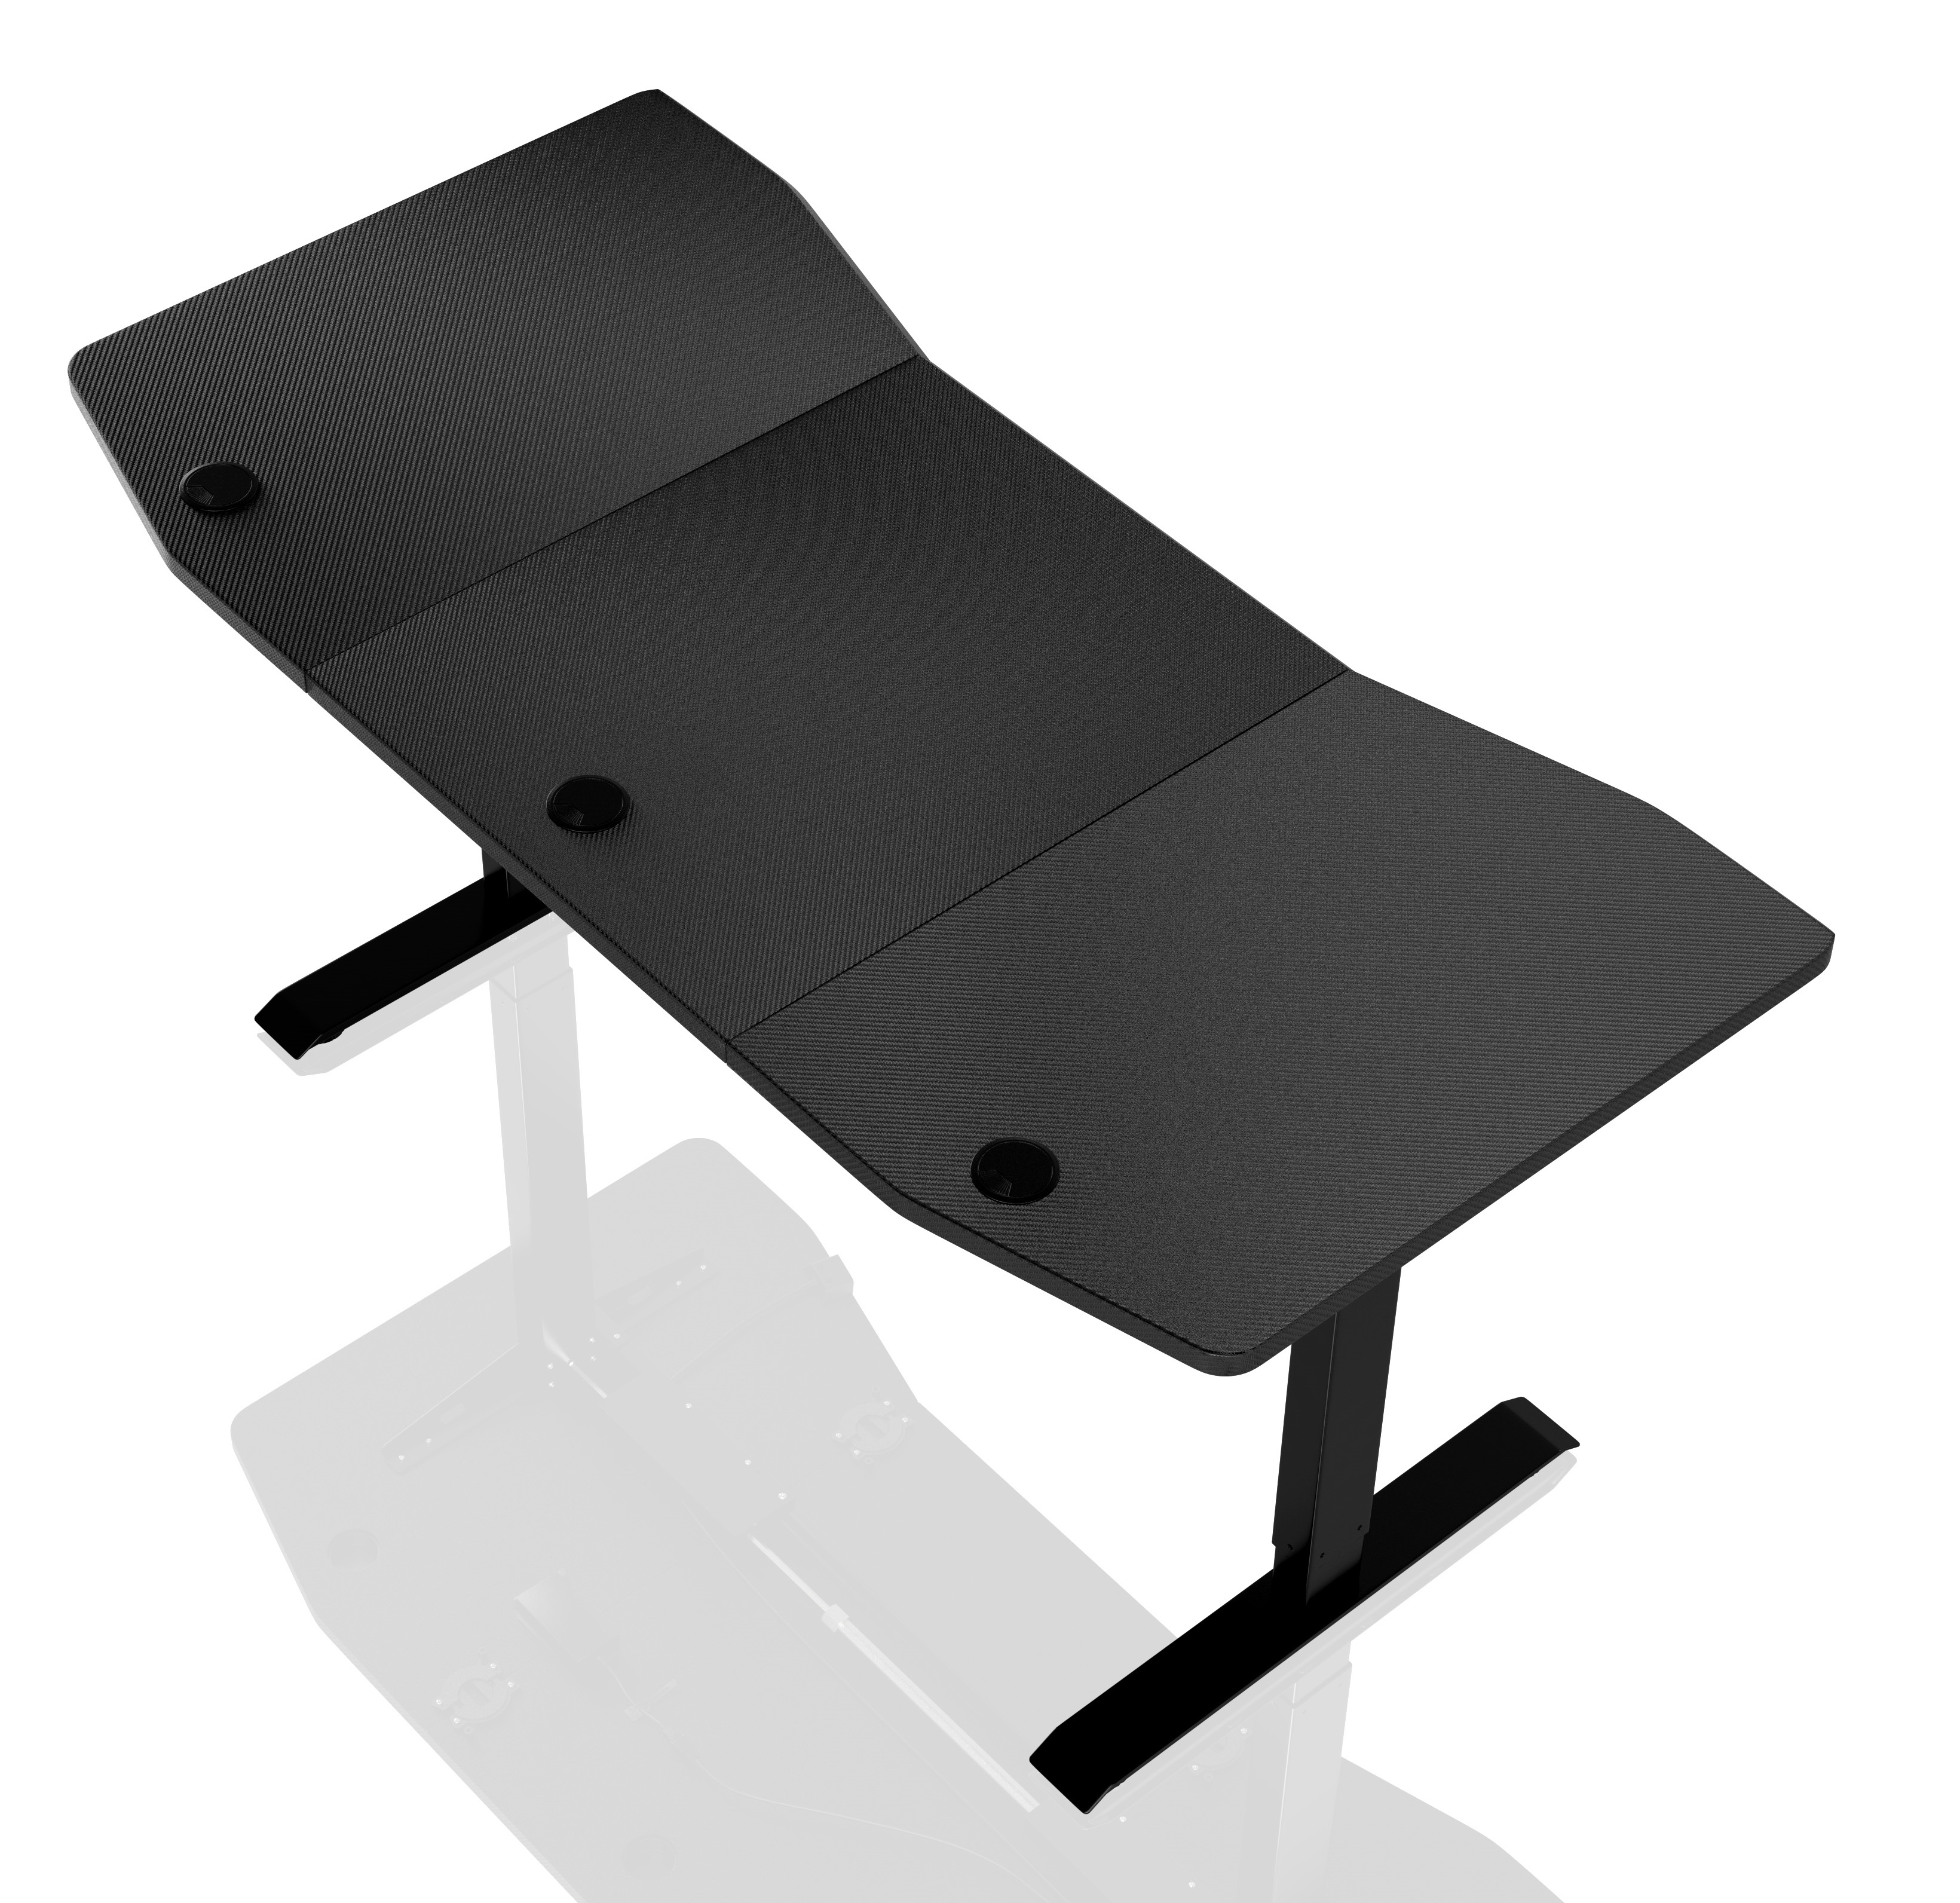 Nitro Concepts - Nitro Concepts D16E Electric Adjustable Sit/Stand Gaming Desk - Carbon Black